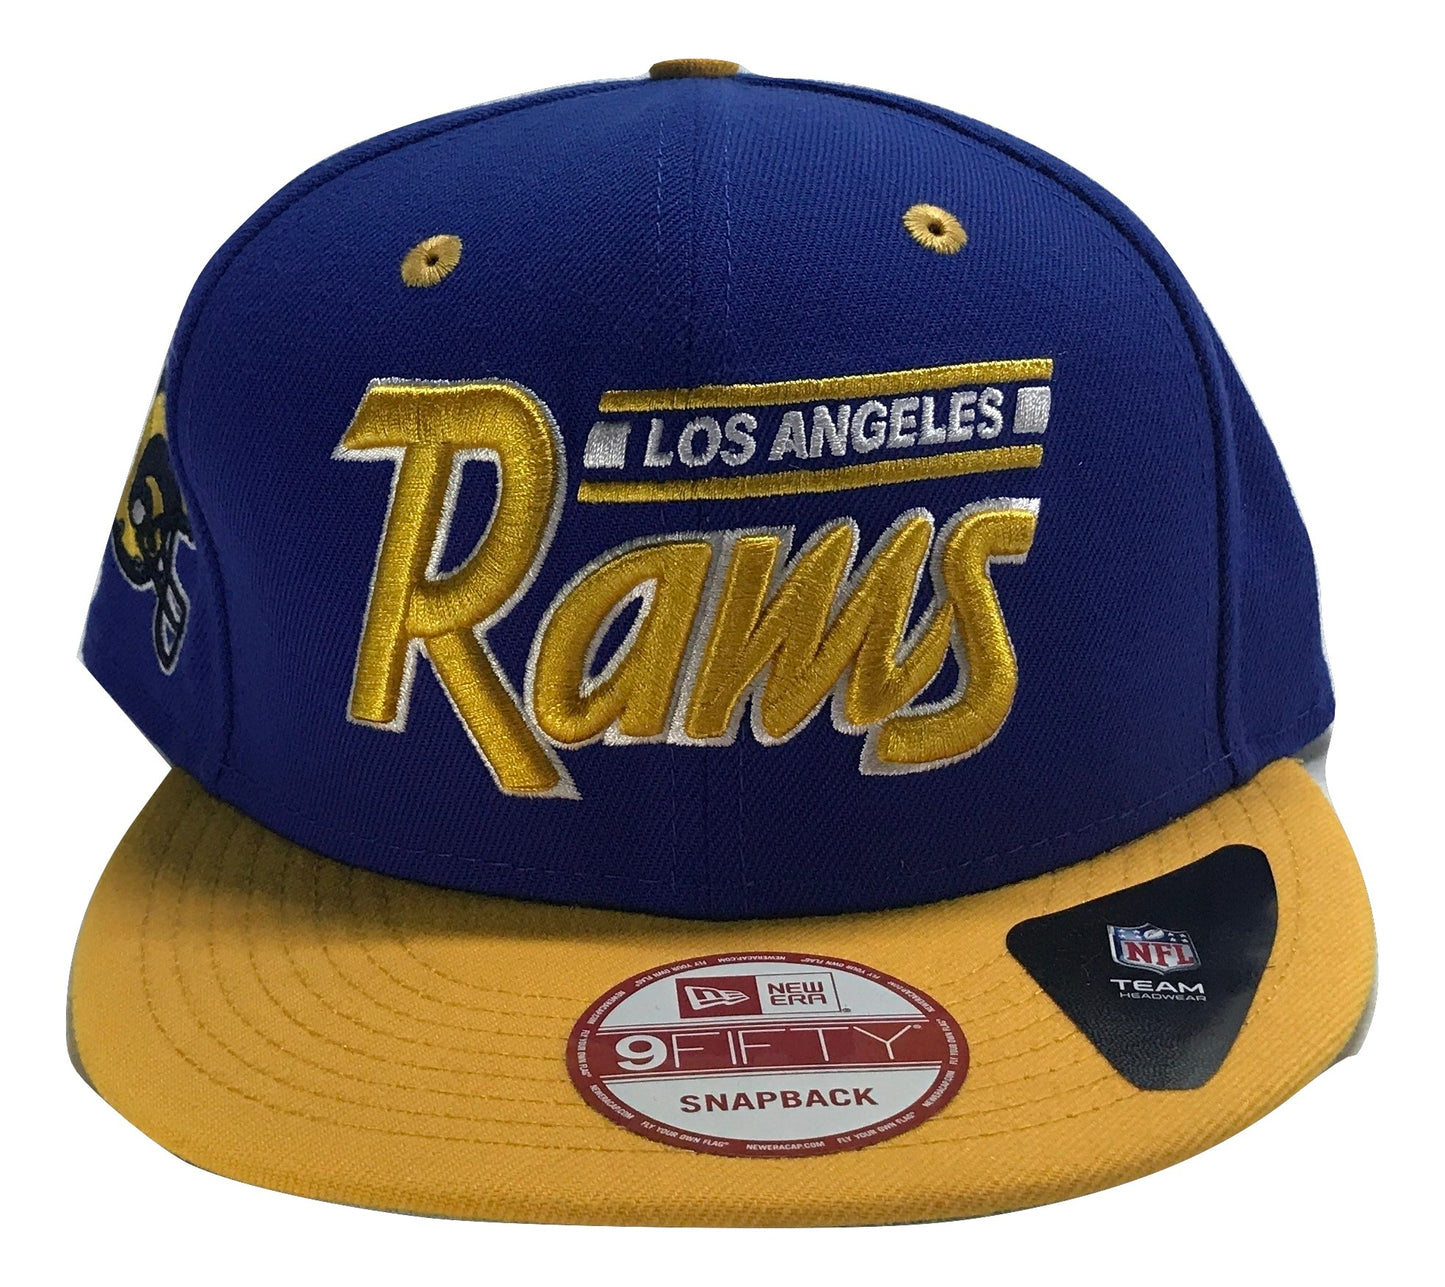 Los Angeles Rams (Blue) New Era Snapback